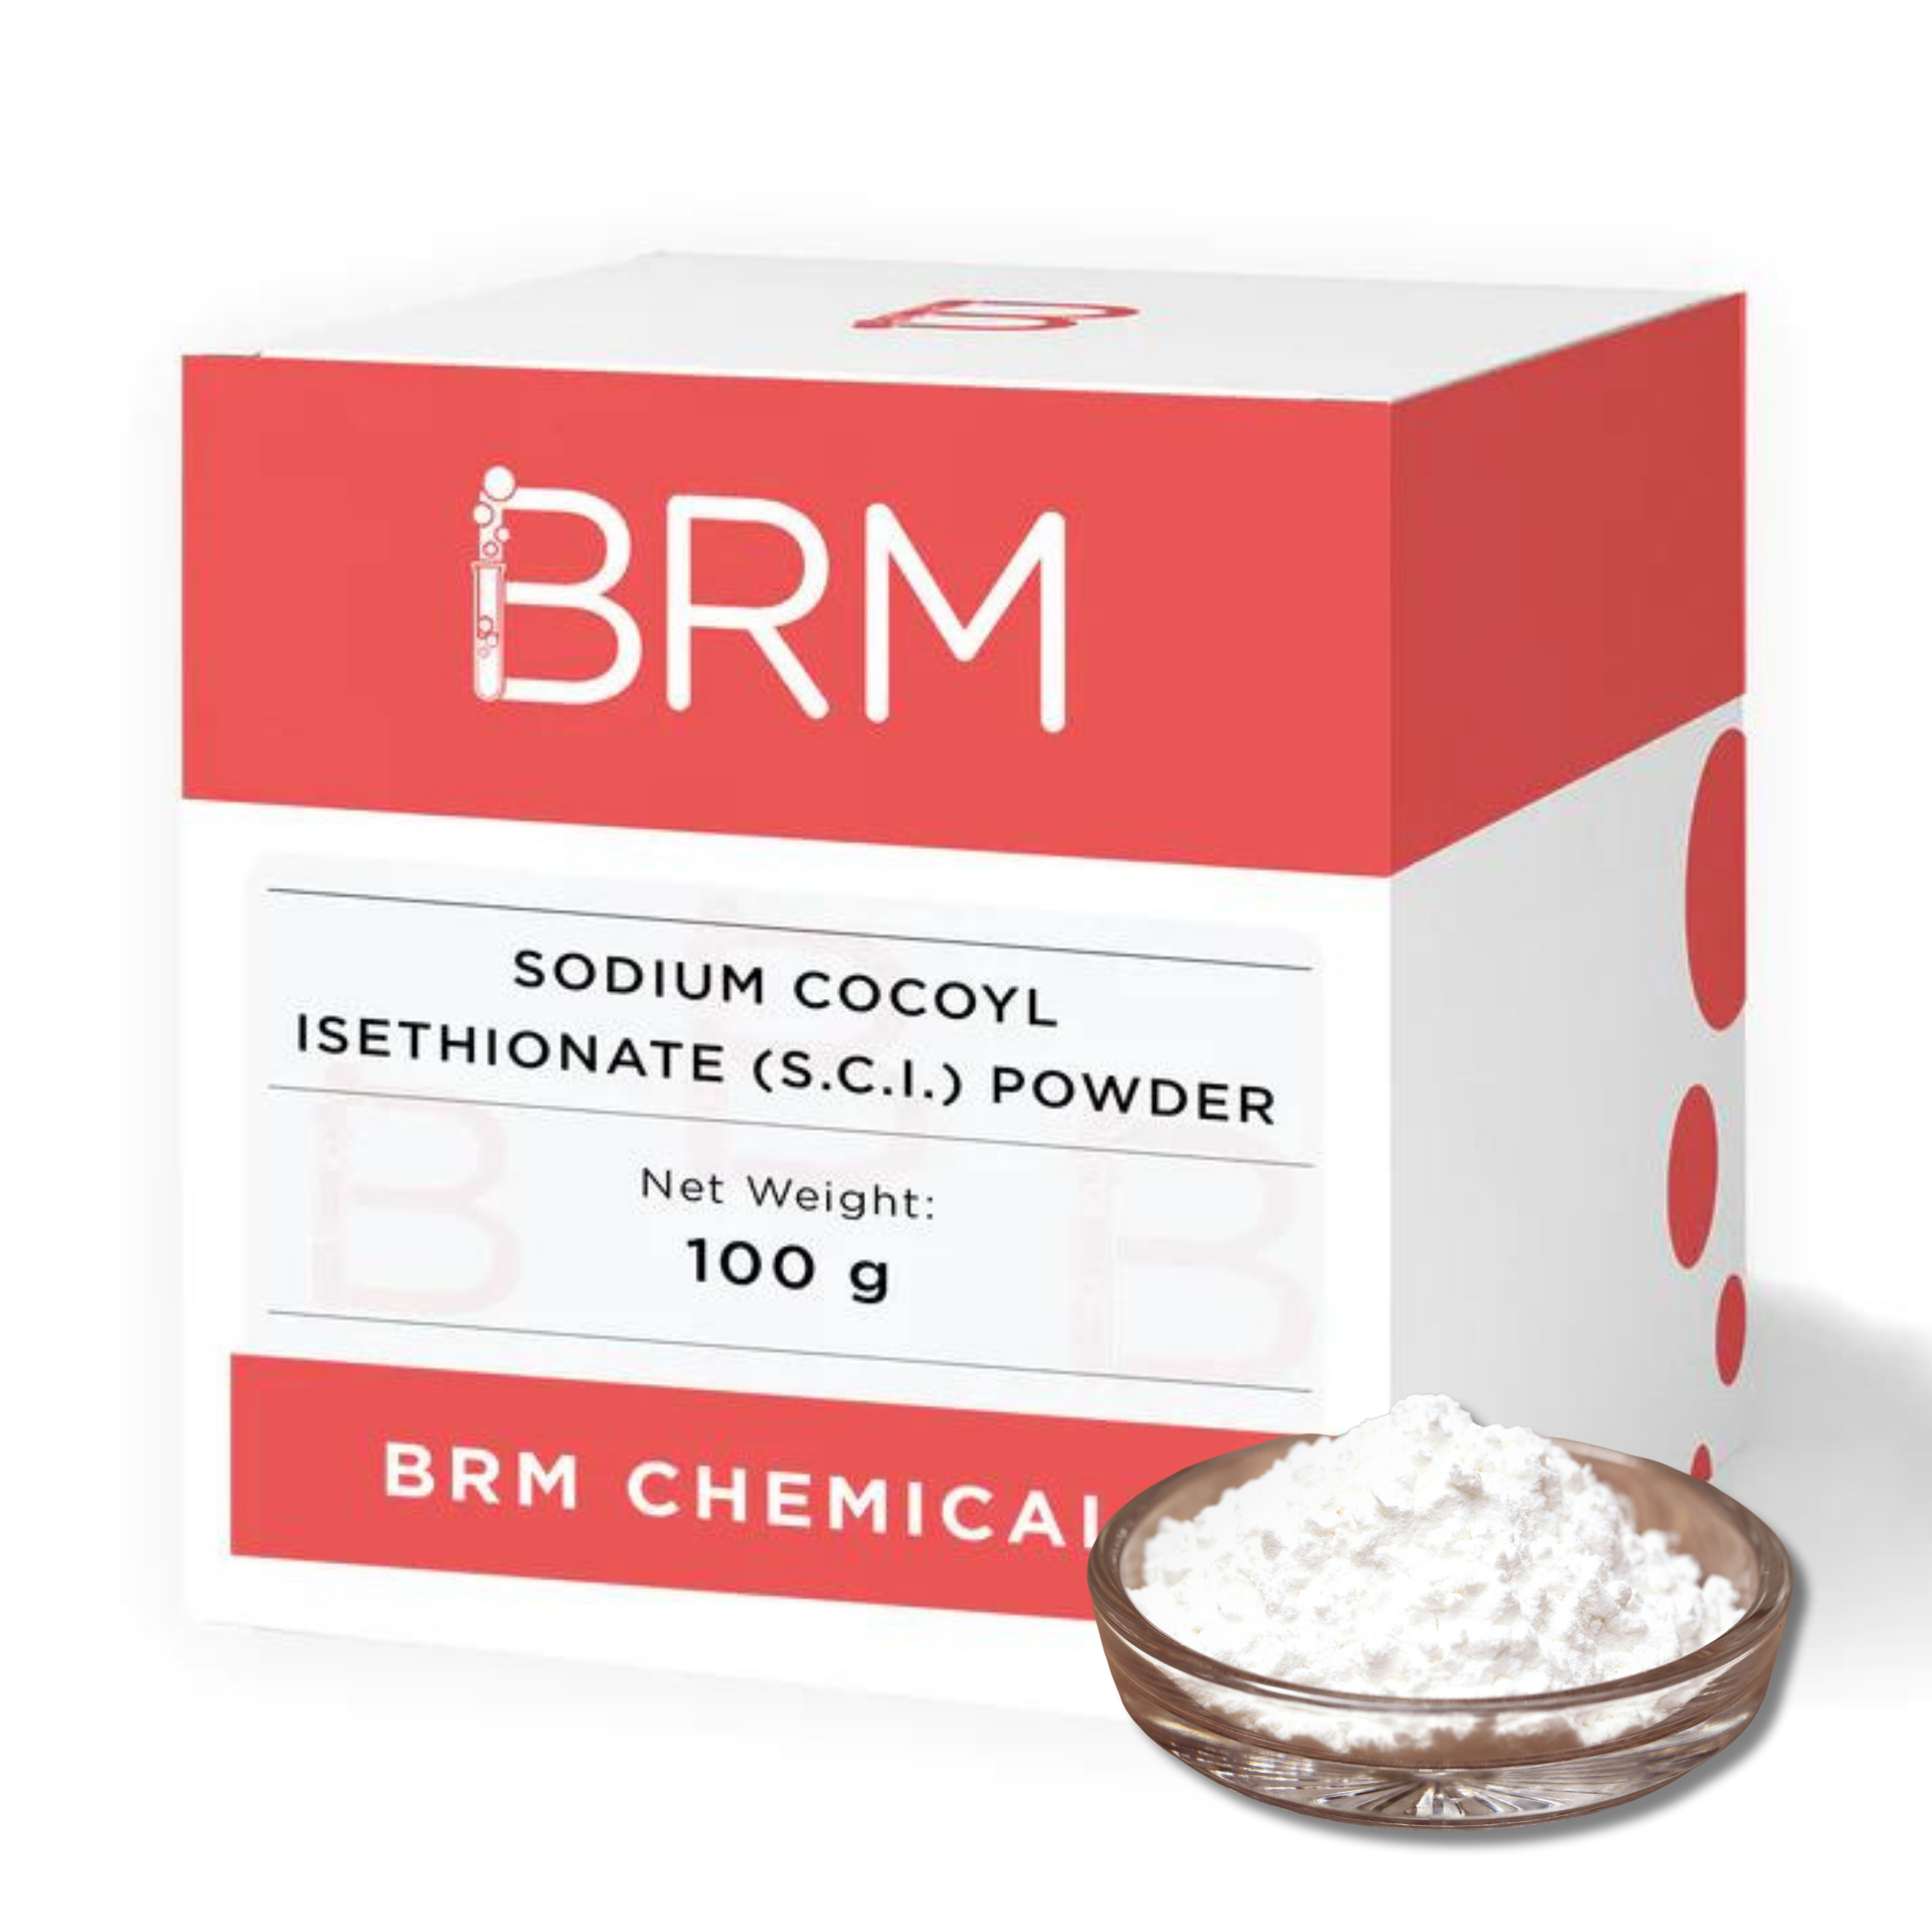 SKYN Botanics - Sodium Cocoyl Isethionate (SCI) Powder ASM 85